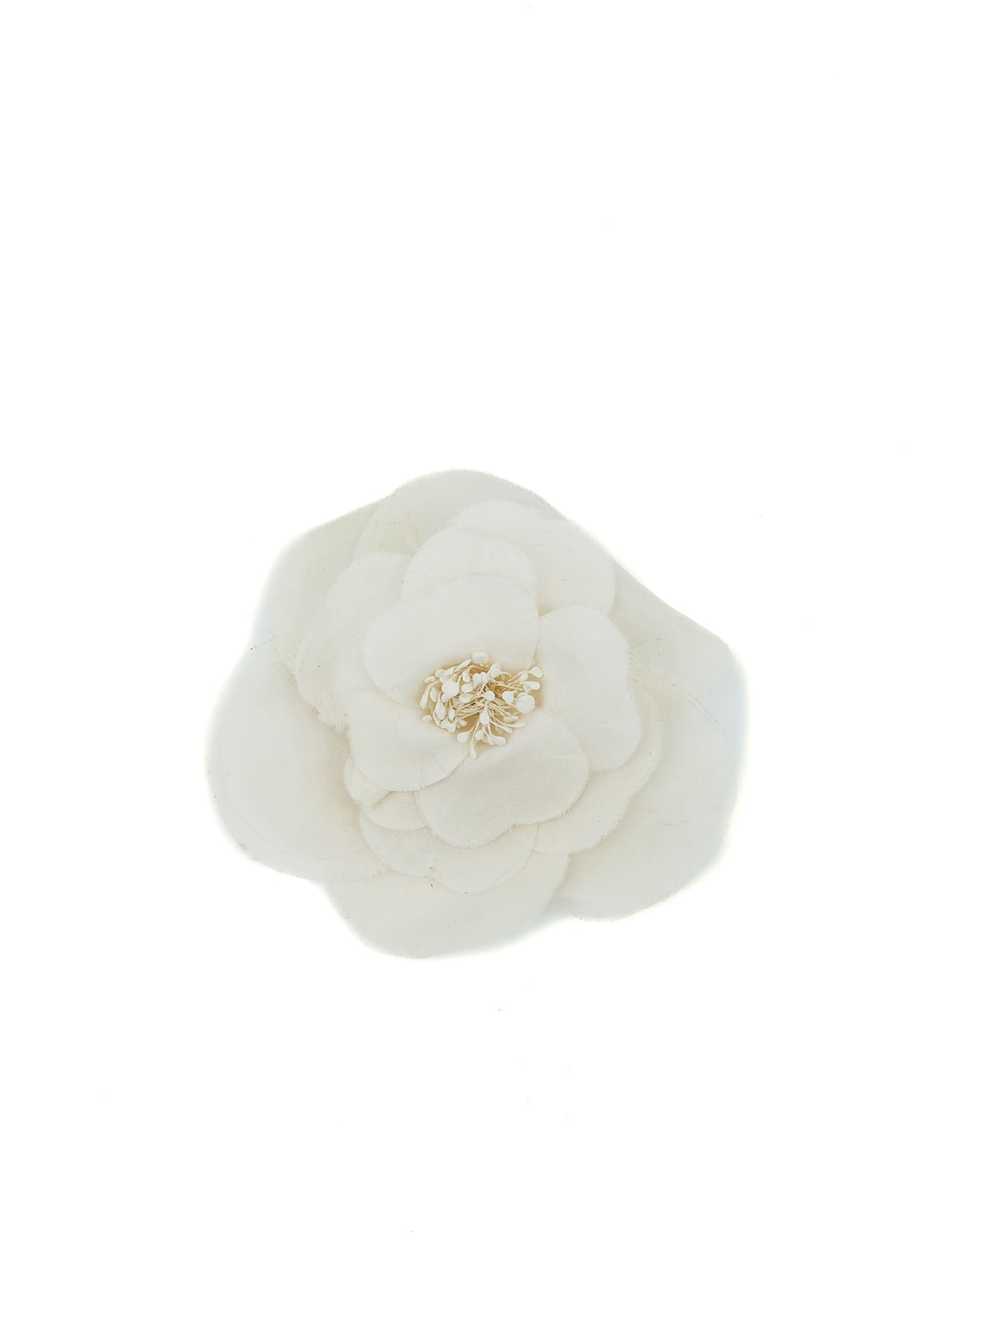 Chanel Camellia Brooch - image 1